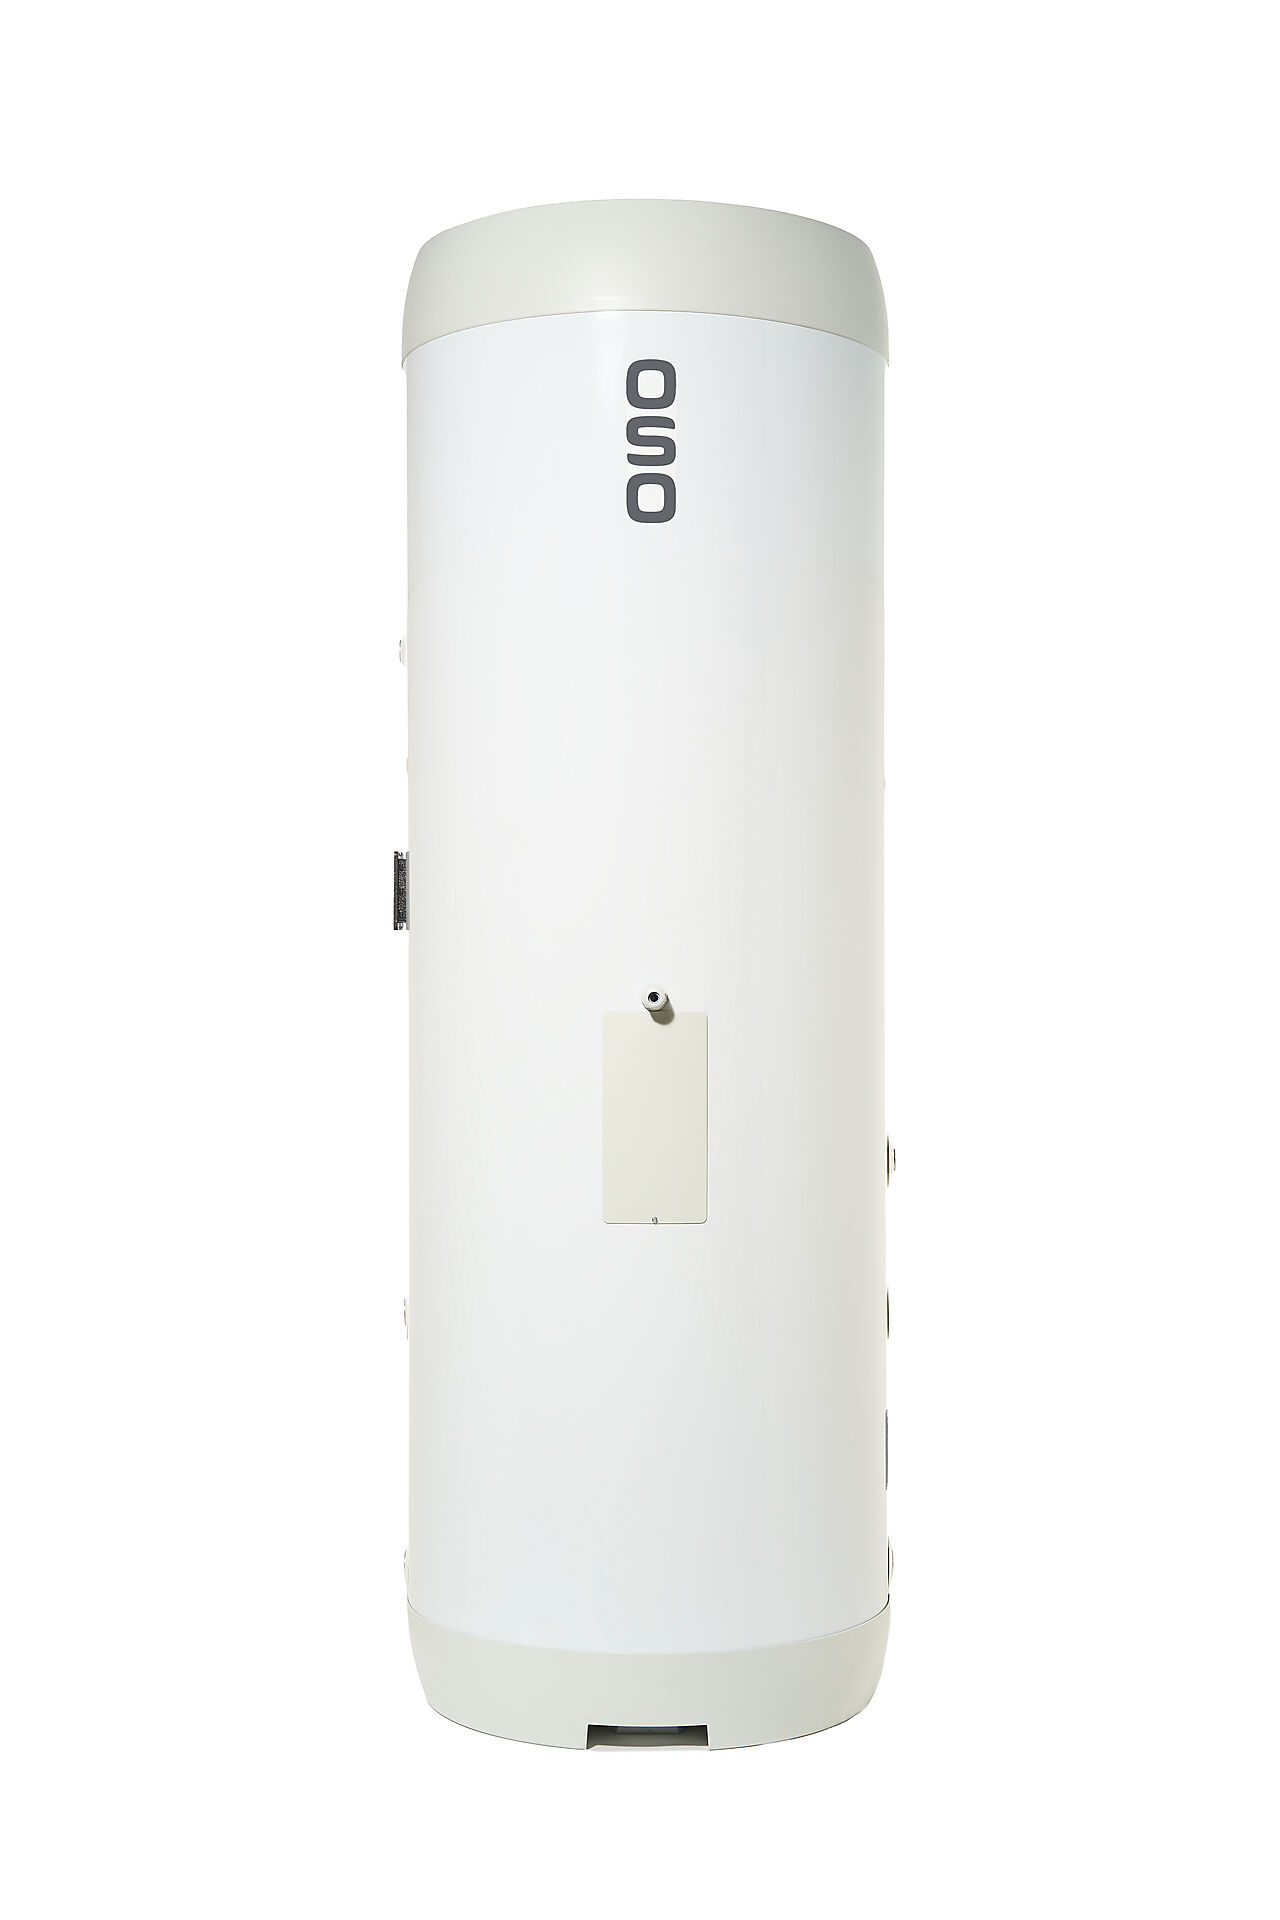 Oso Hotwater OSO OGC 300 varmesentral 3KW 3X230V+HX1,8M2 1